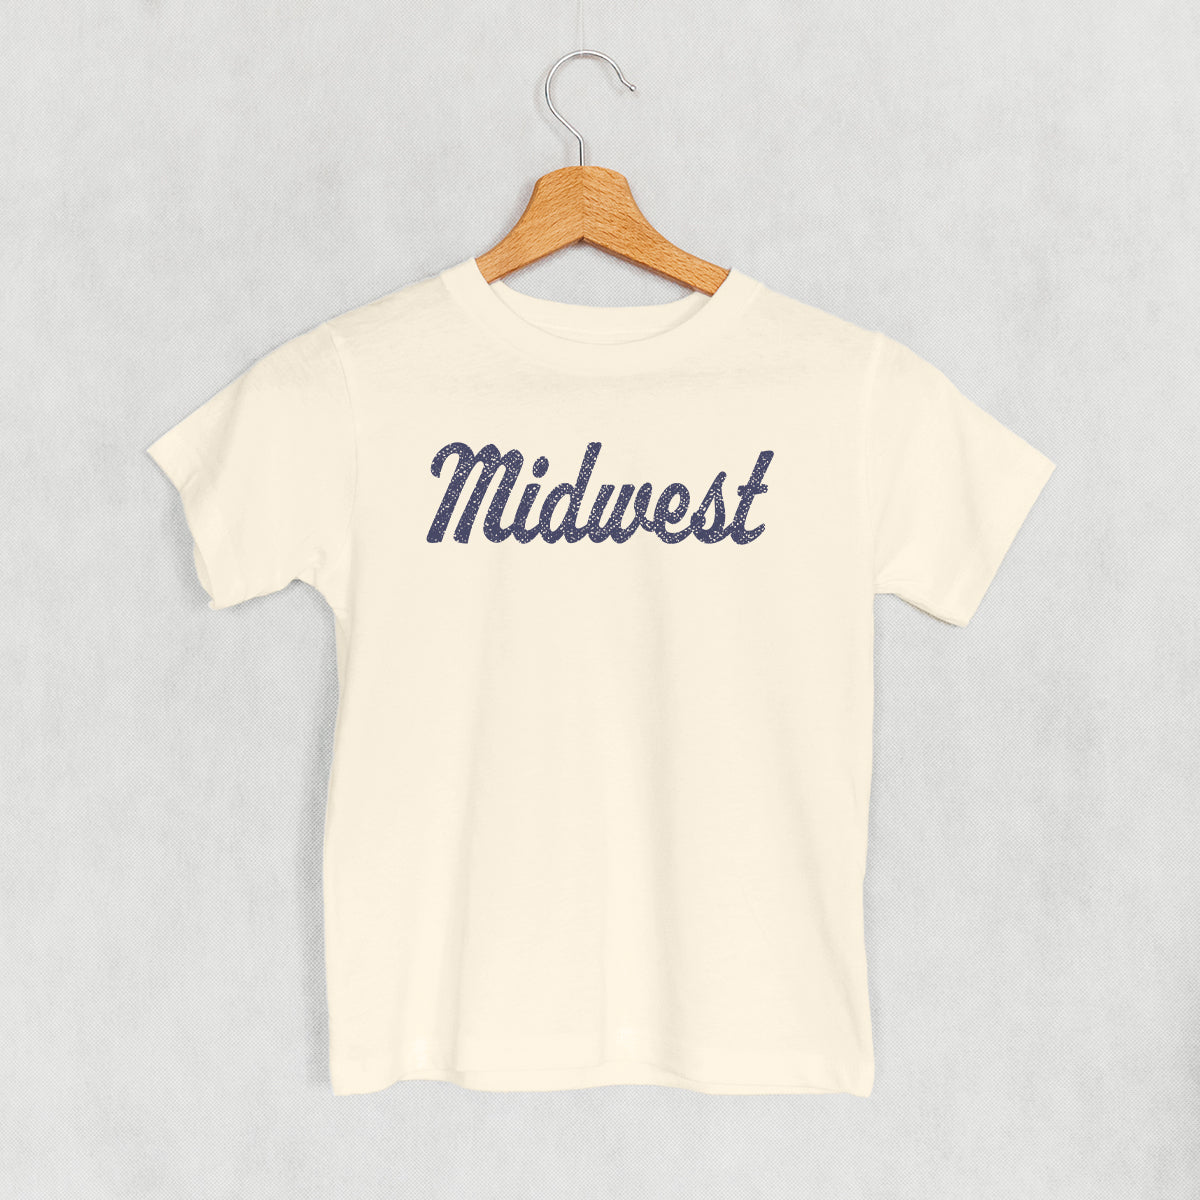 Midwest Script (Kids)